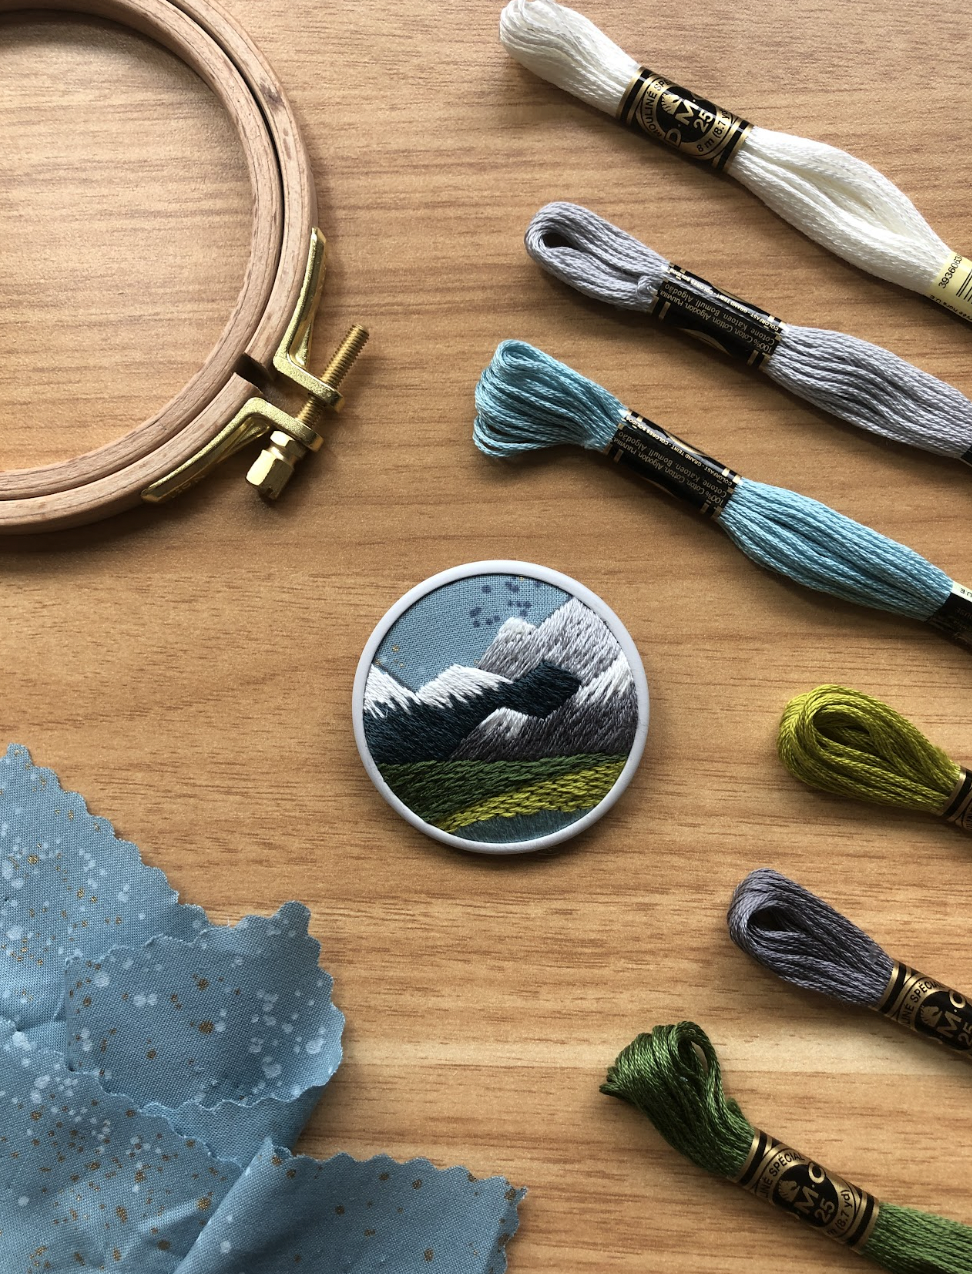 EMBROIDERY CLASS: Stitch A Pacific Northwest Mountain Landscape Pendant